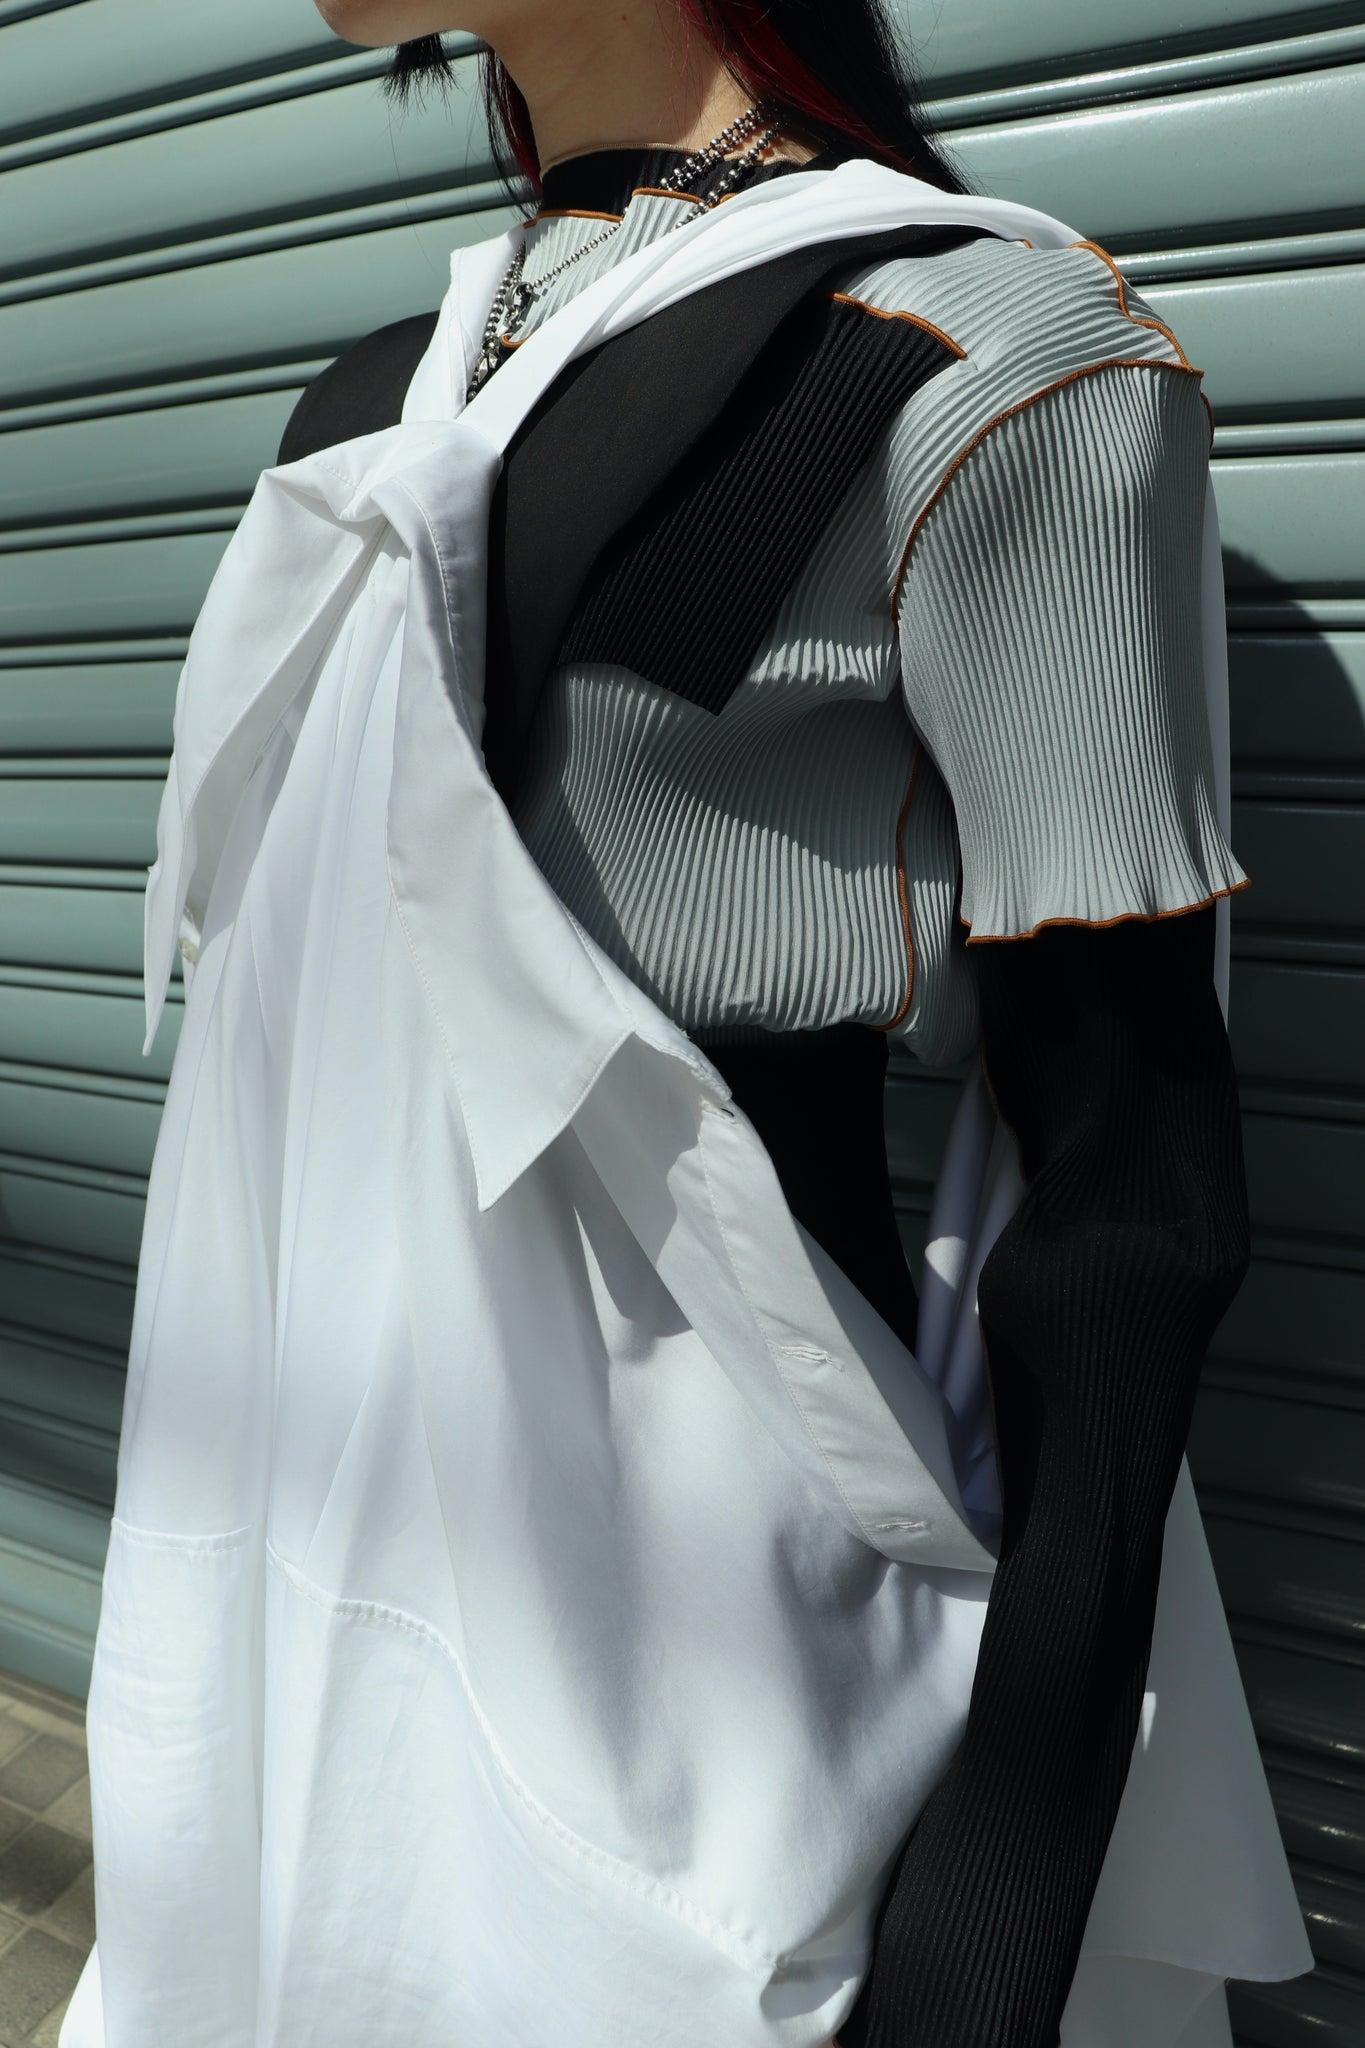 AKIKOAOKI 23SS 2WAY SHIRT DRESS 02を使用したスタイリング画像